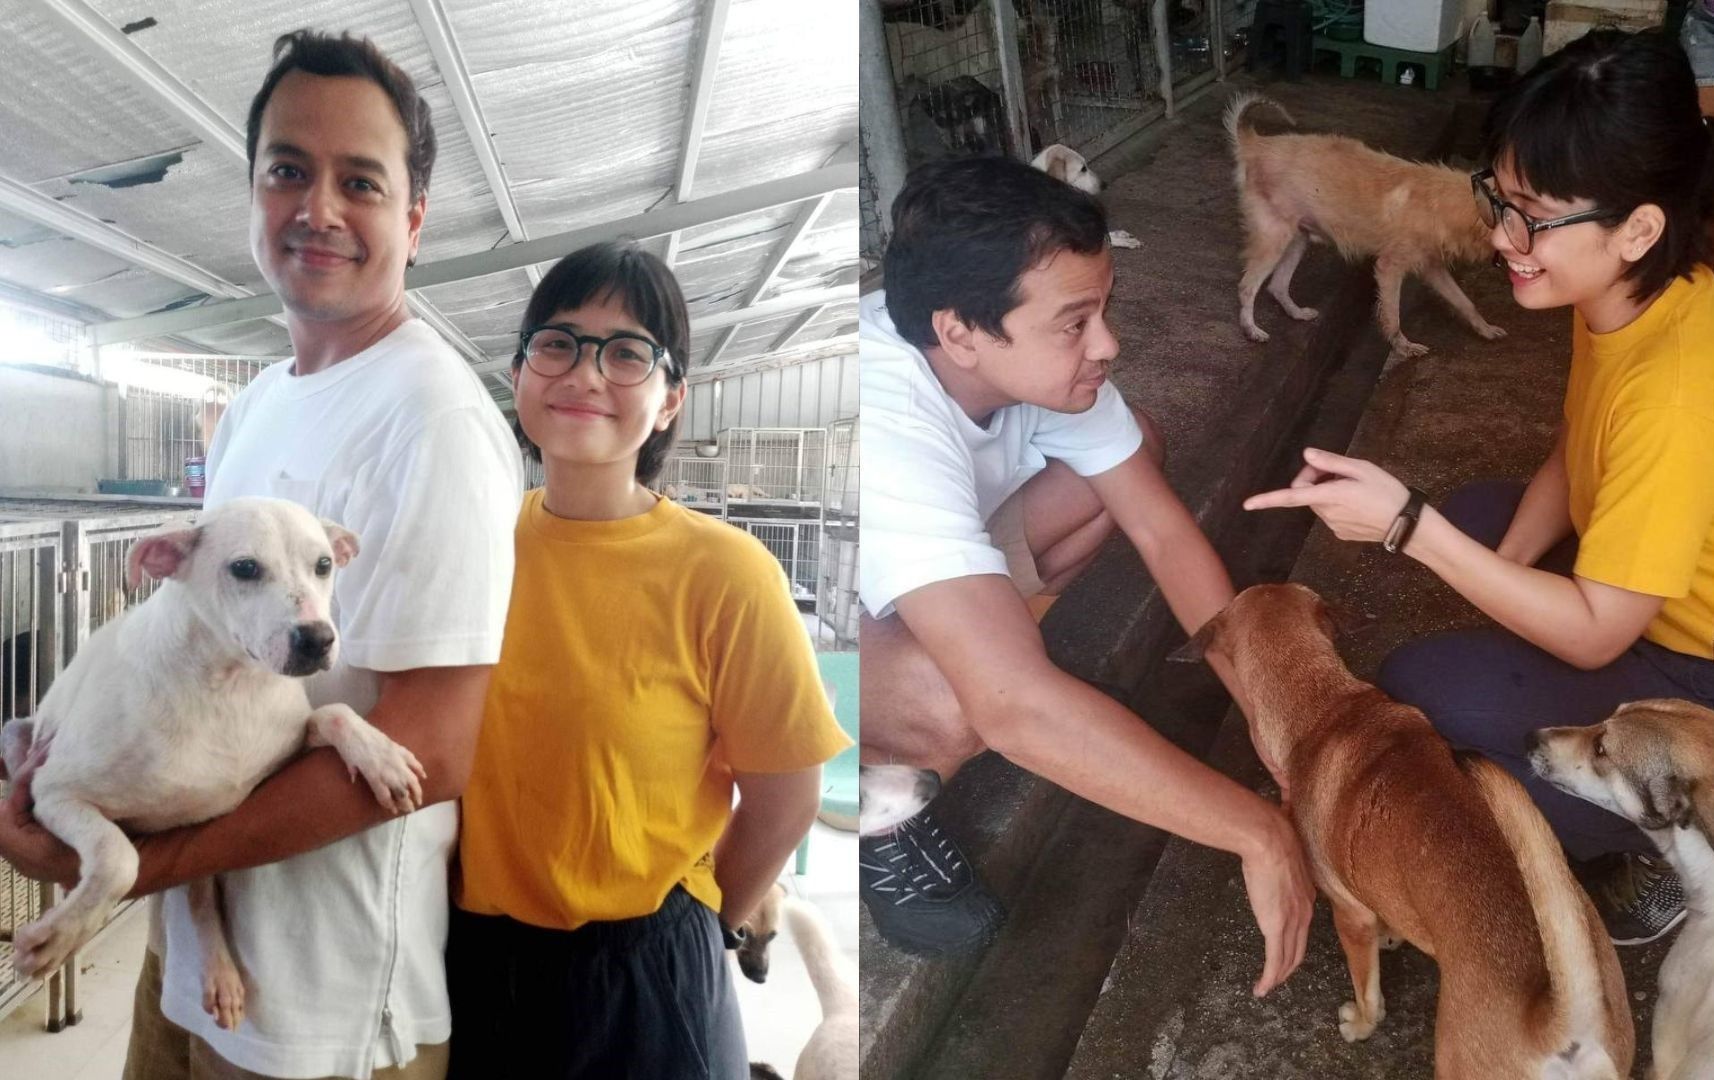 John Lloyd Cruz visits animal shelter with rumored girlfriend Isabel Santos to adopt a dog